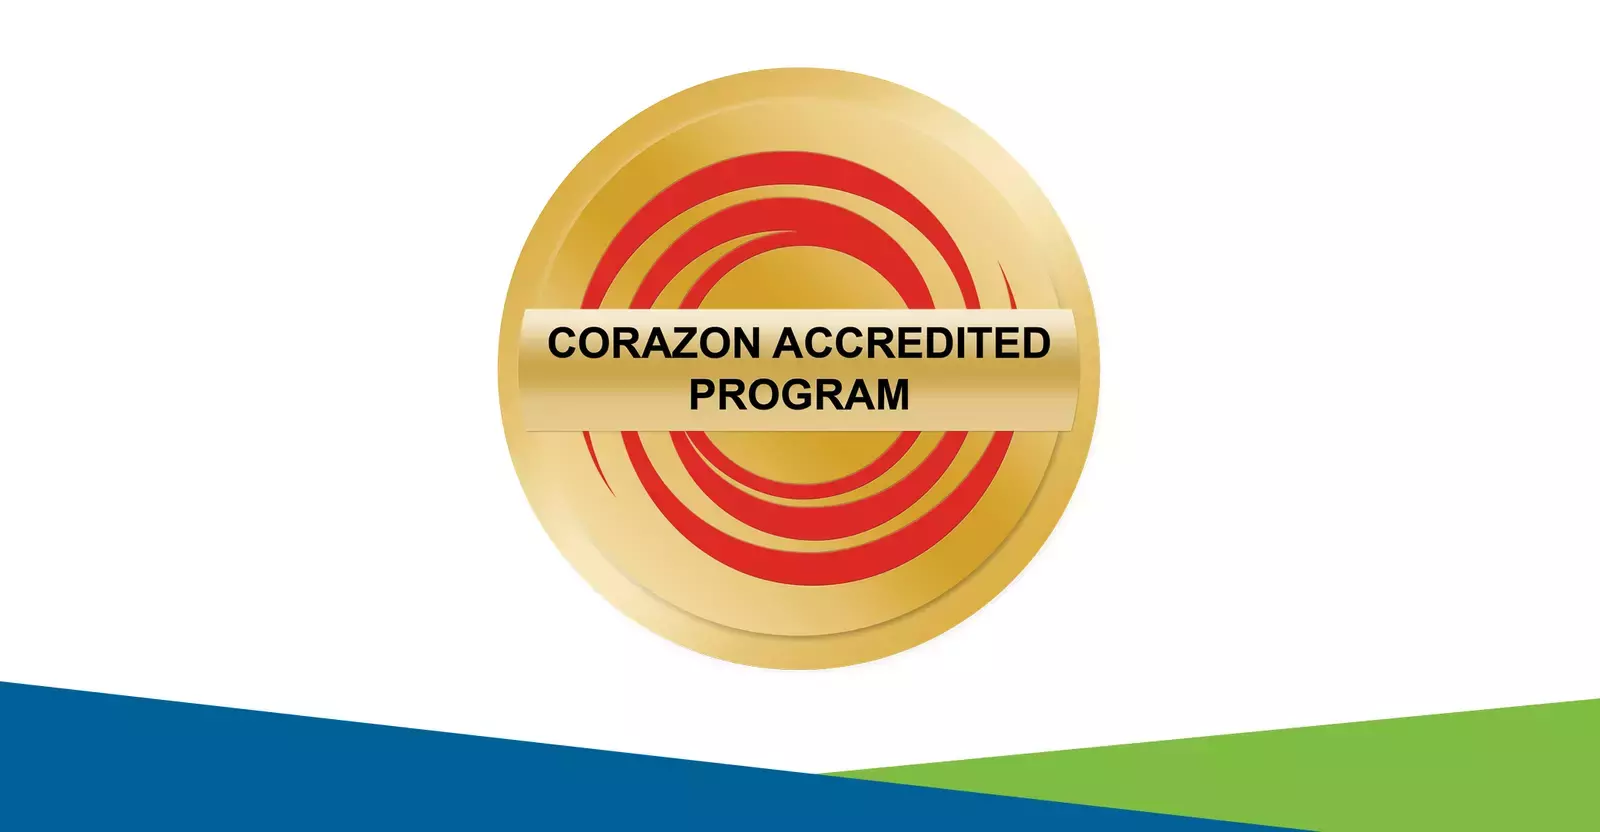 Corazon Accreditation Image 